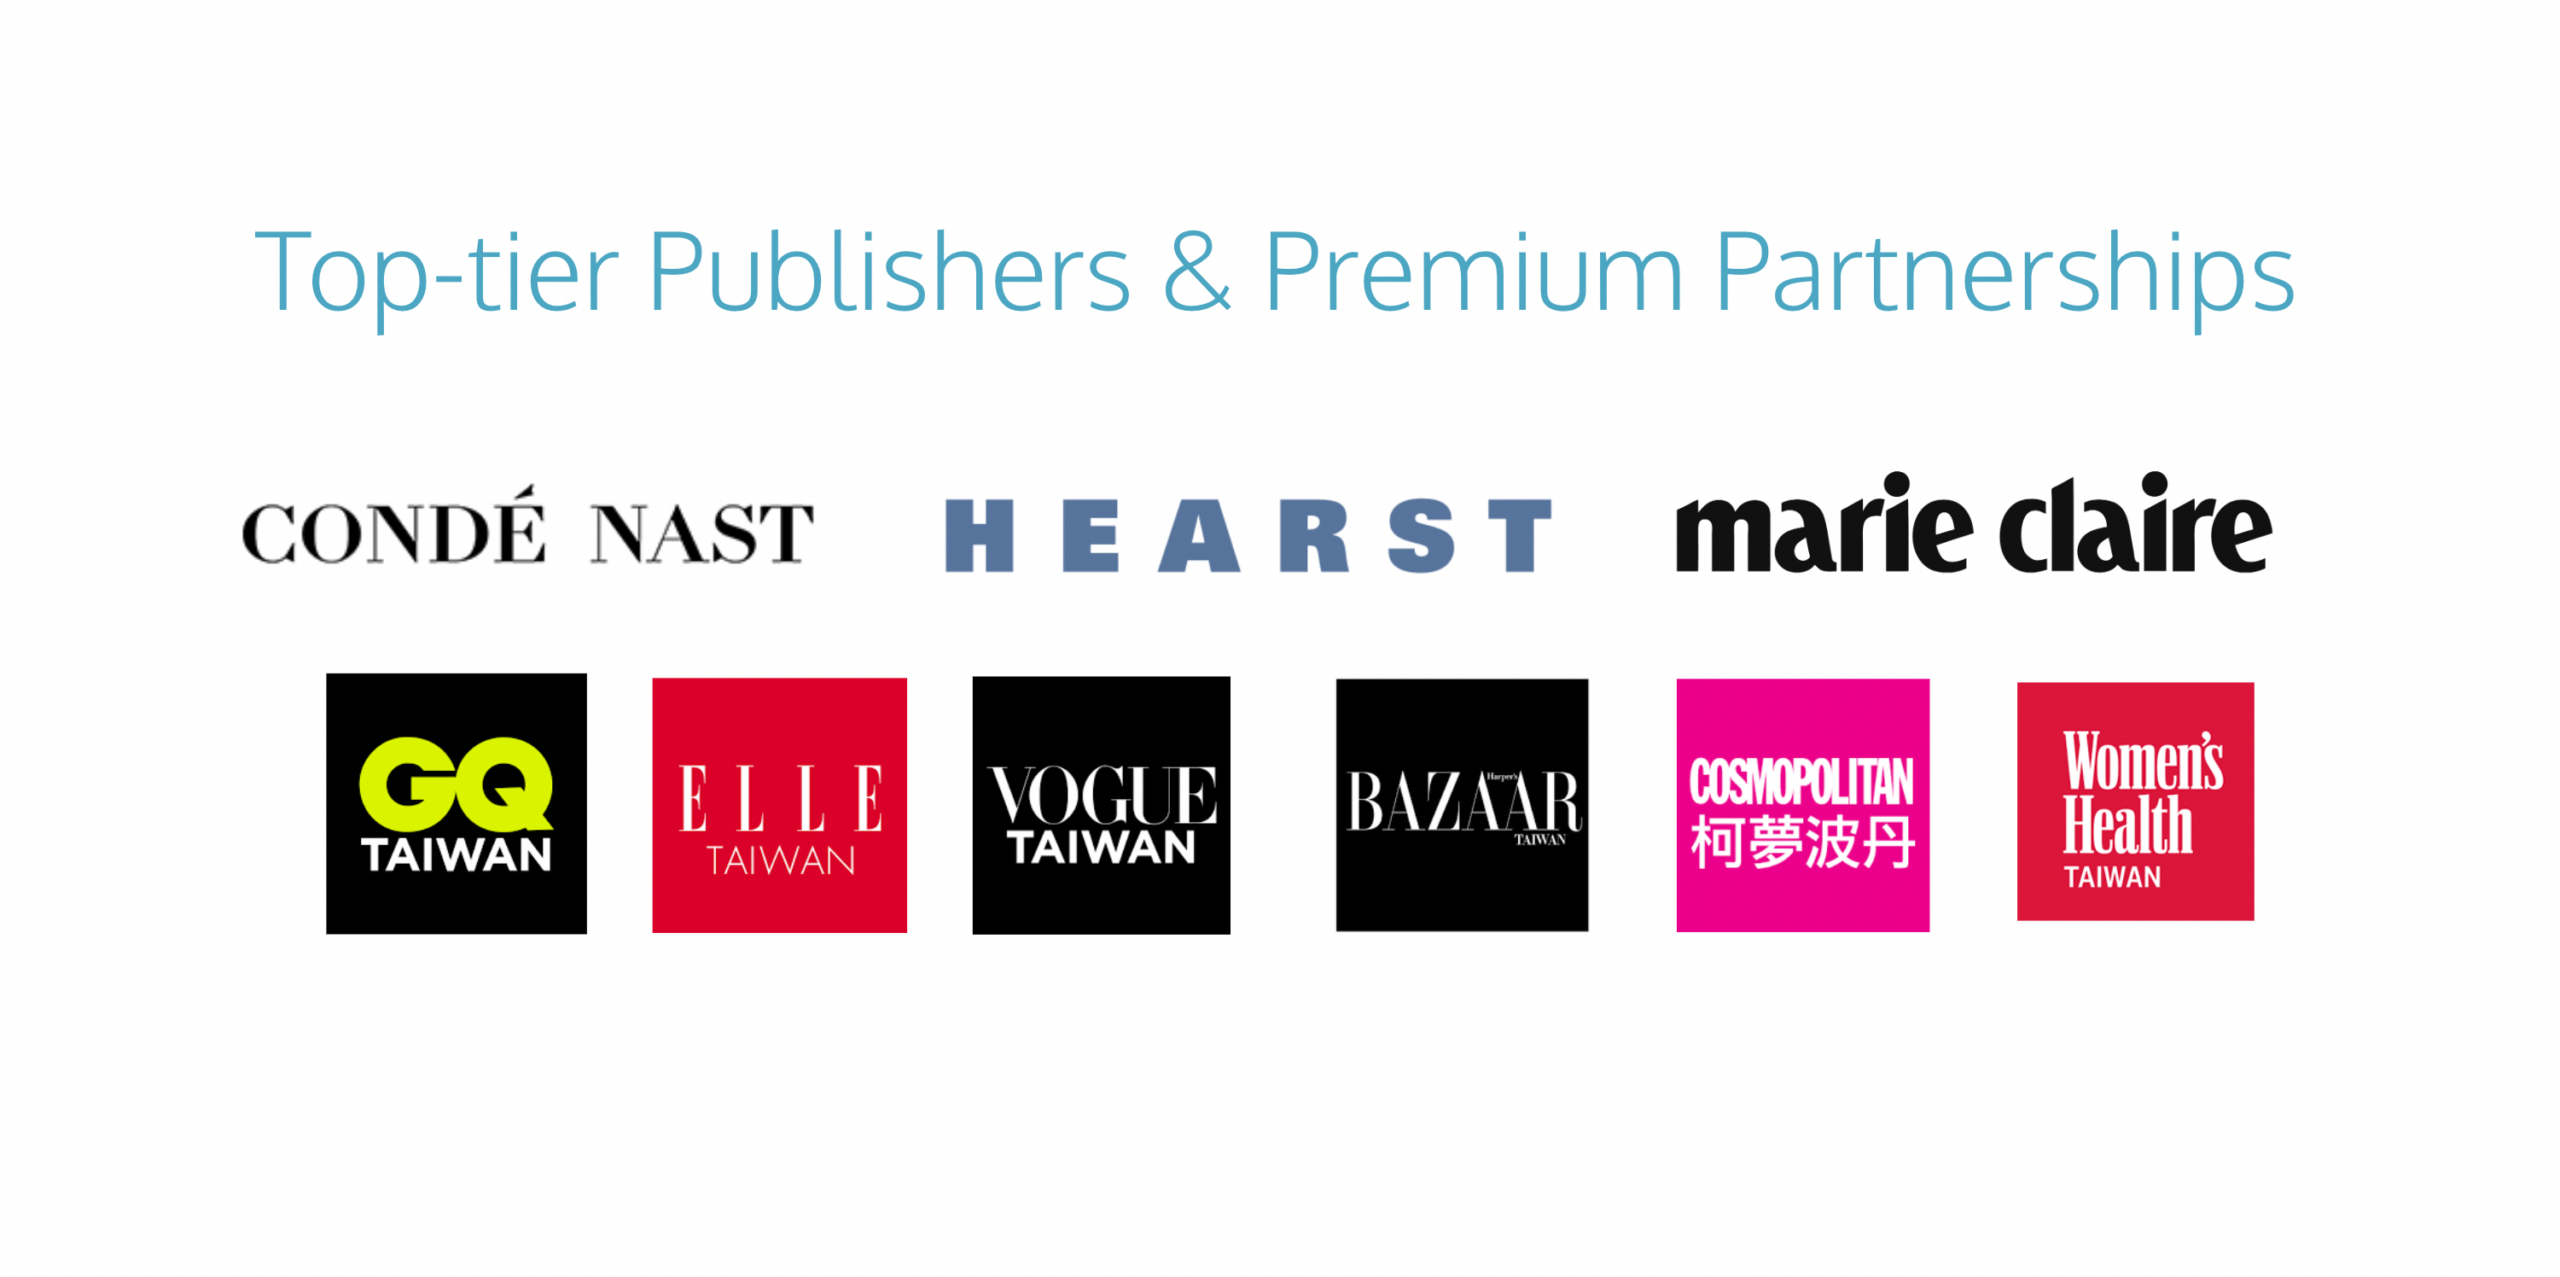 Top-tier Publishers & Premium Partnerships